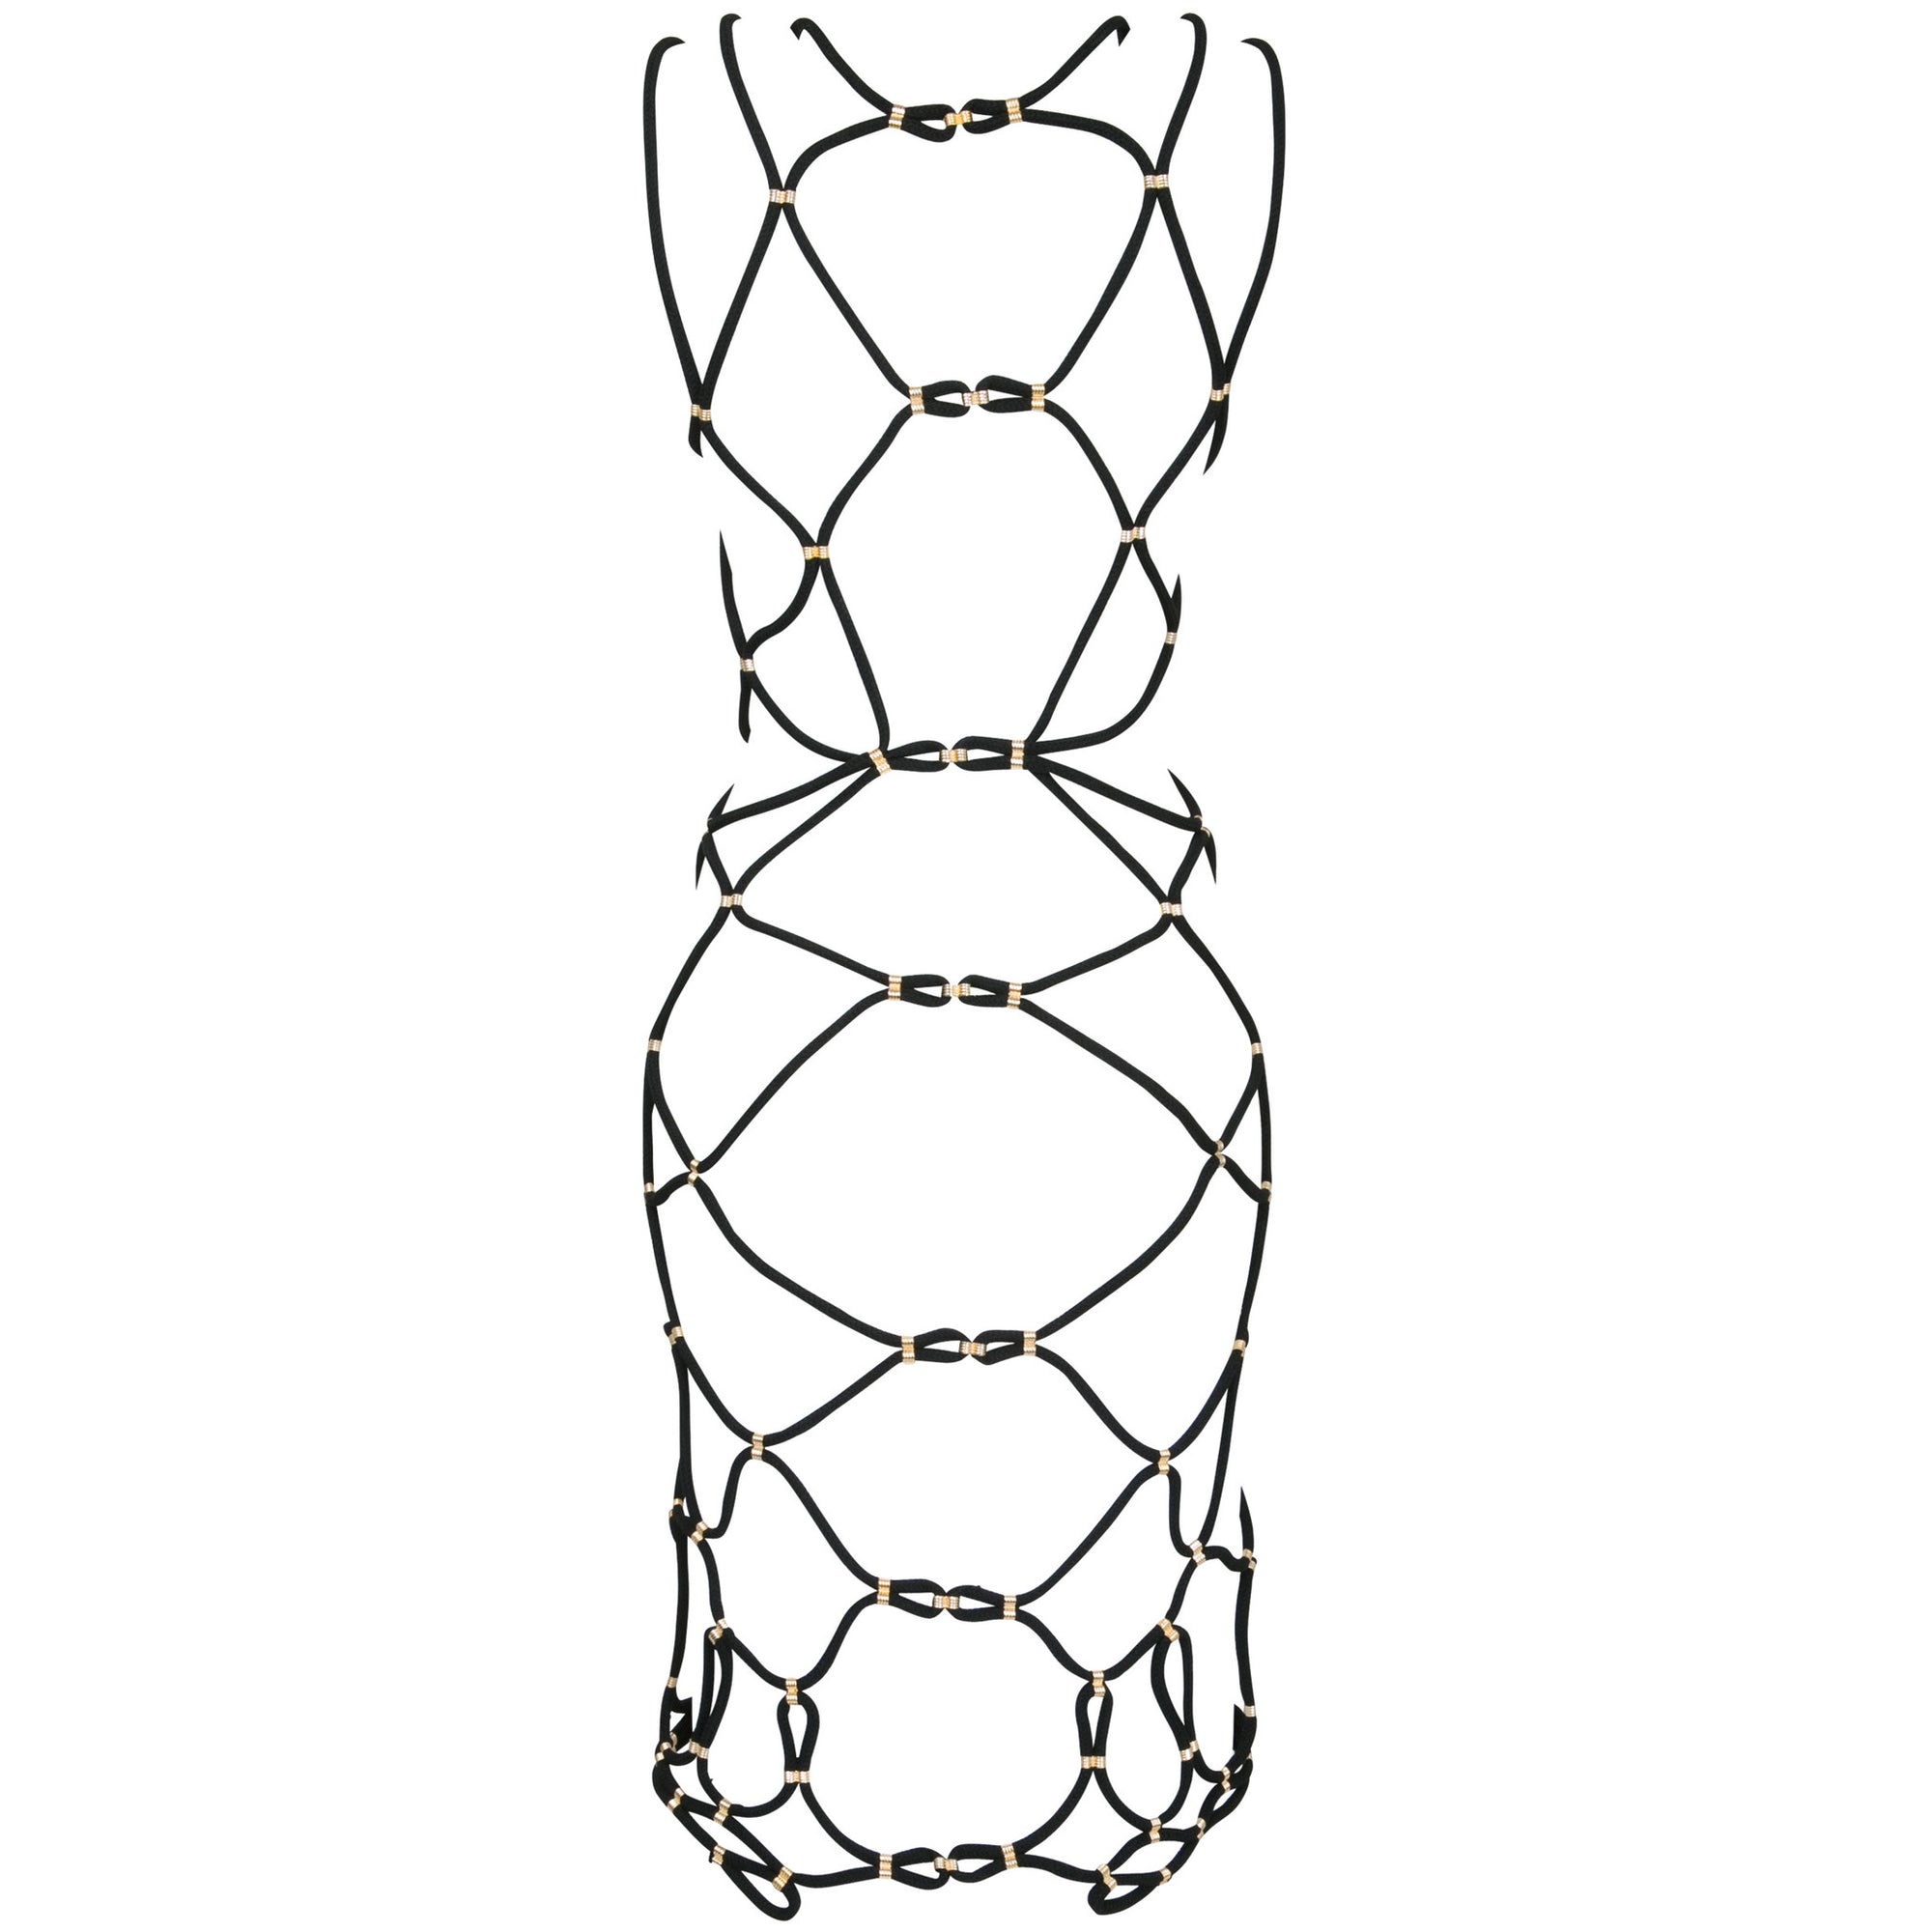 DSTM Shibari rope dress